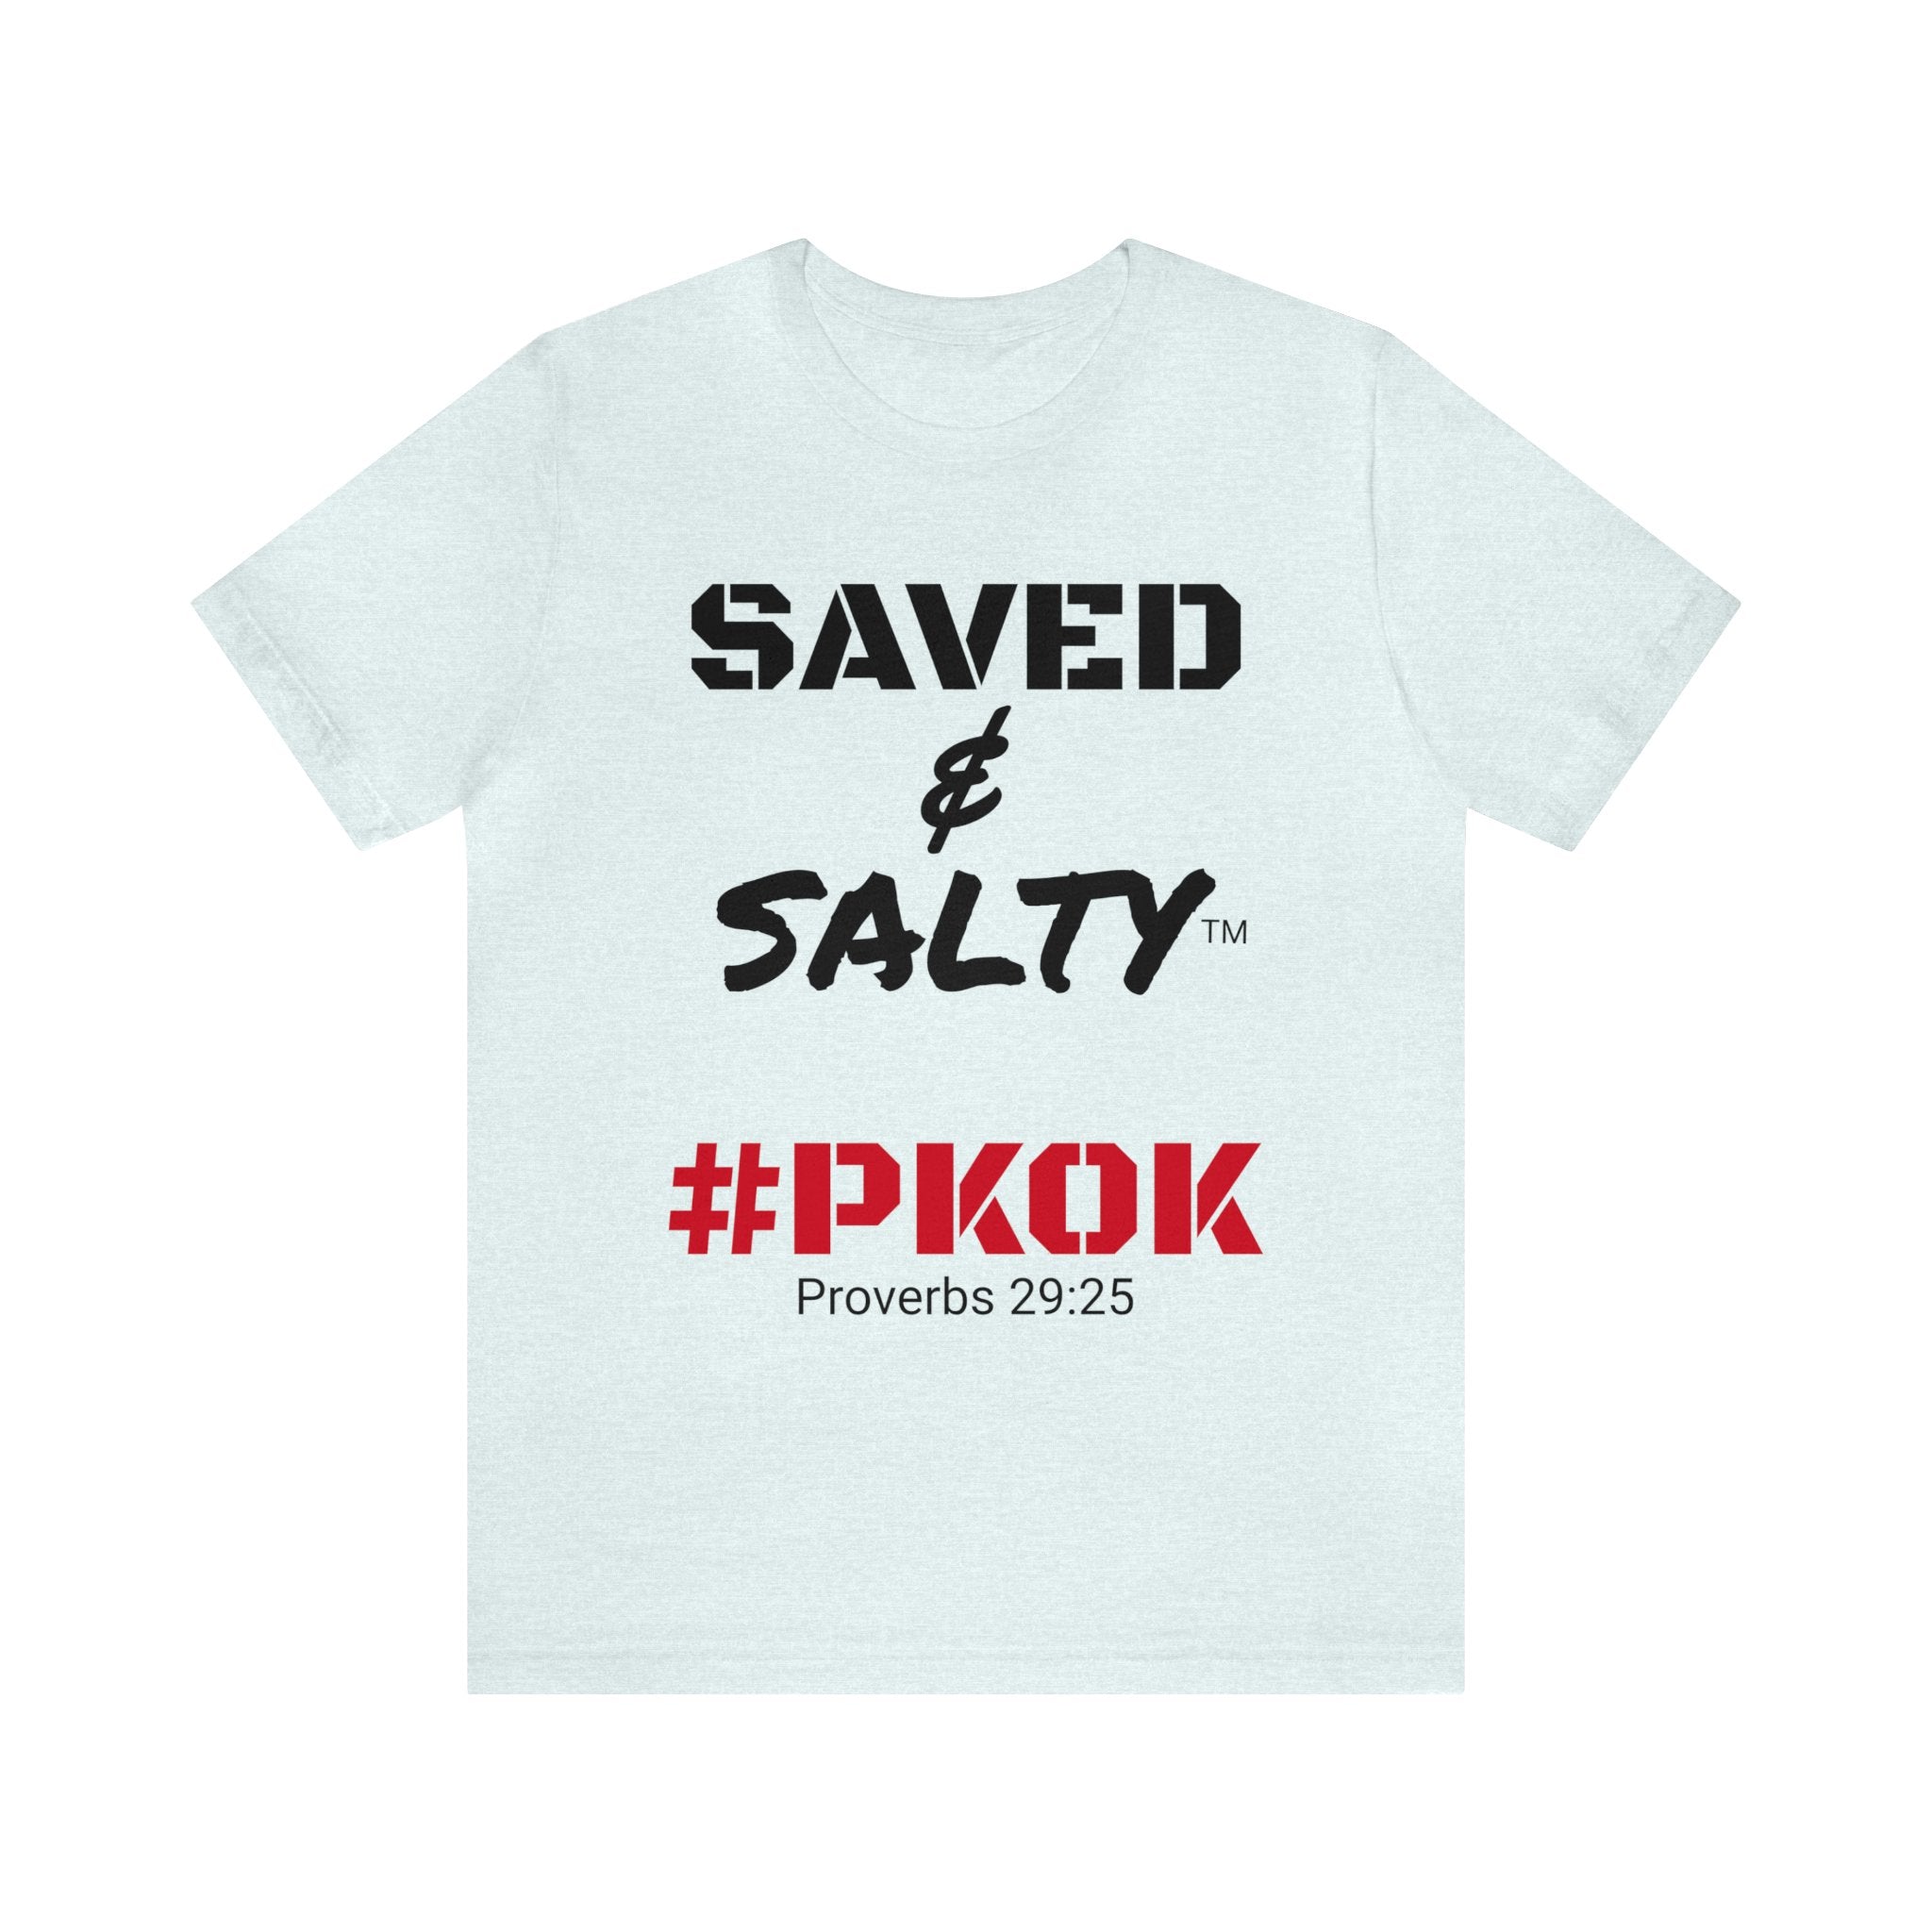 #Saved&Salty #PKOK #Scripture #Proverbs 29:25 #2Timothy1:7 #Unisex #Jersey #ShortSleeve #Tee